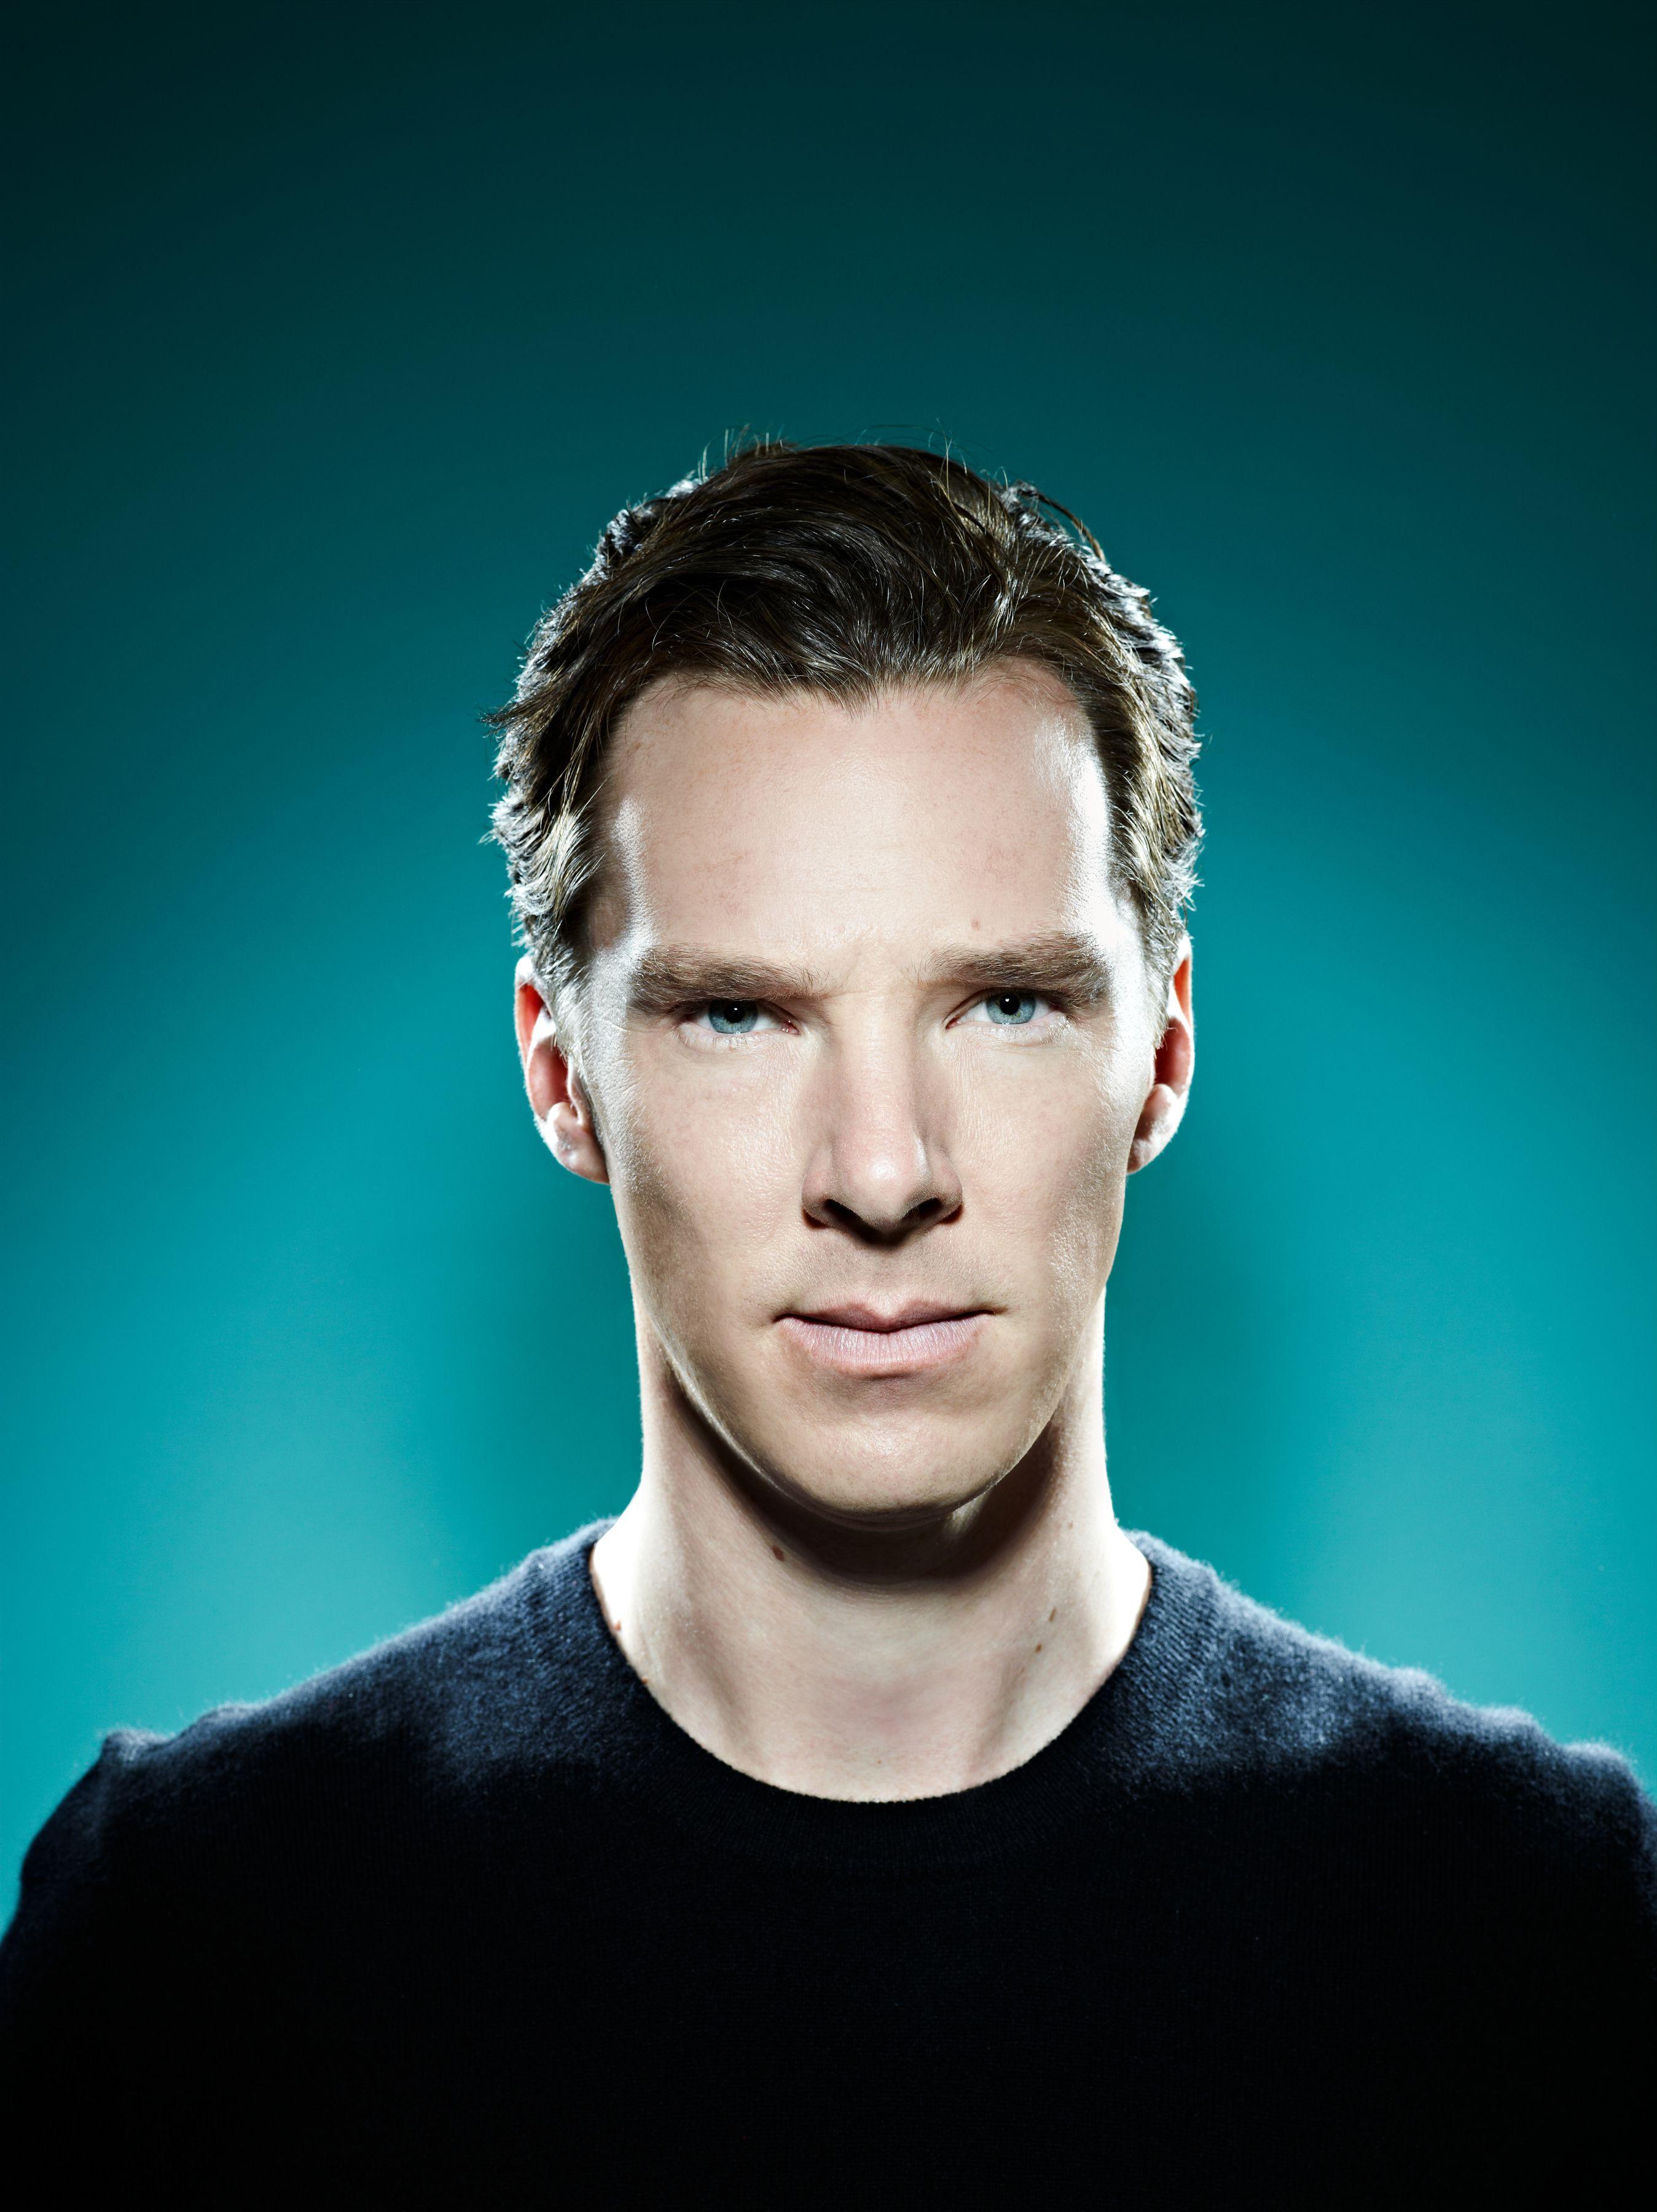 Here is Benedict Cumberbatch. People, portraits, headshots